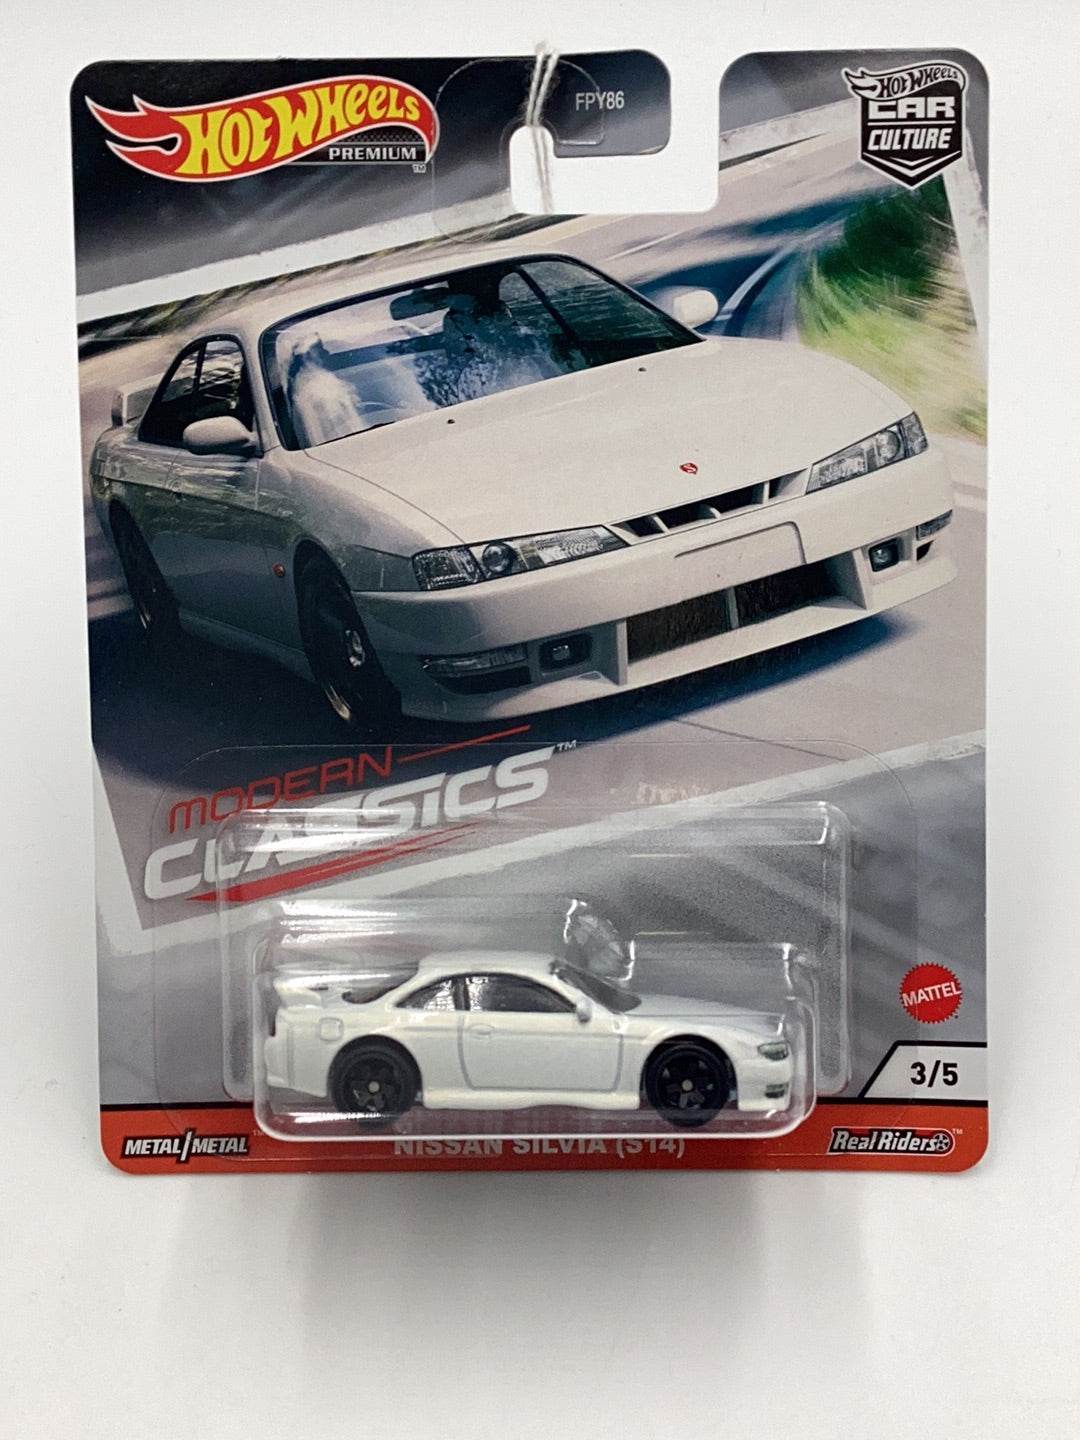 Hot wheels car culture modern classics Nissan Silvia S14 #3